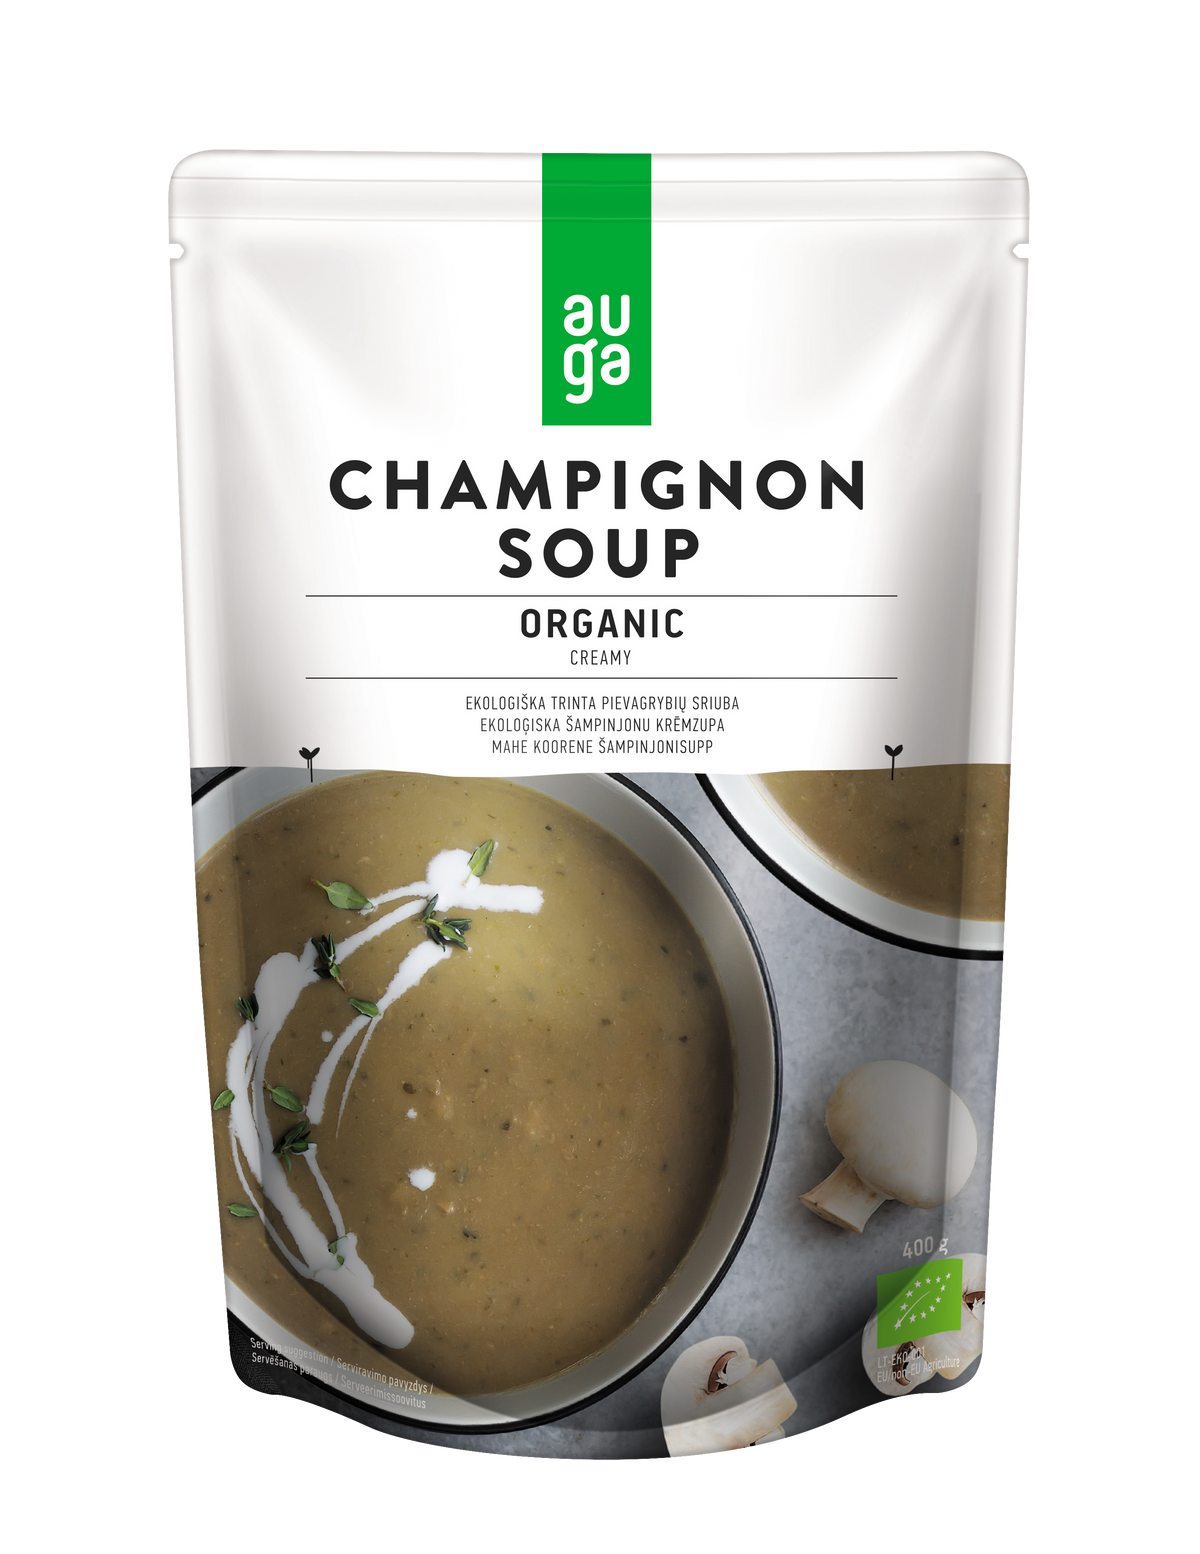 Organic Champignon Soup Creamy (400G)